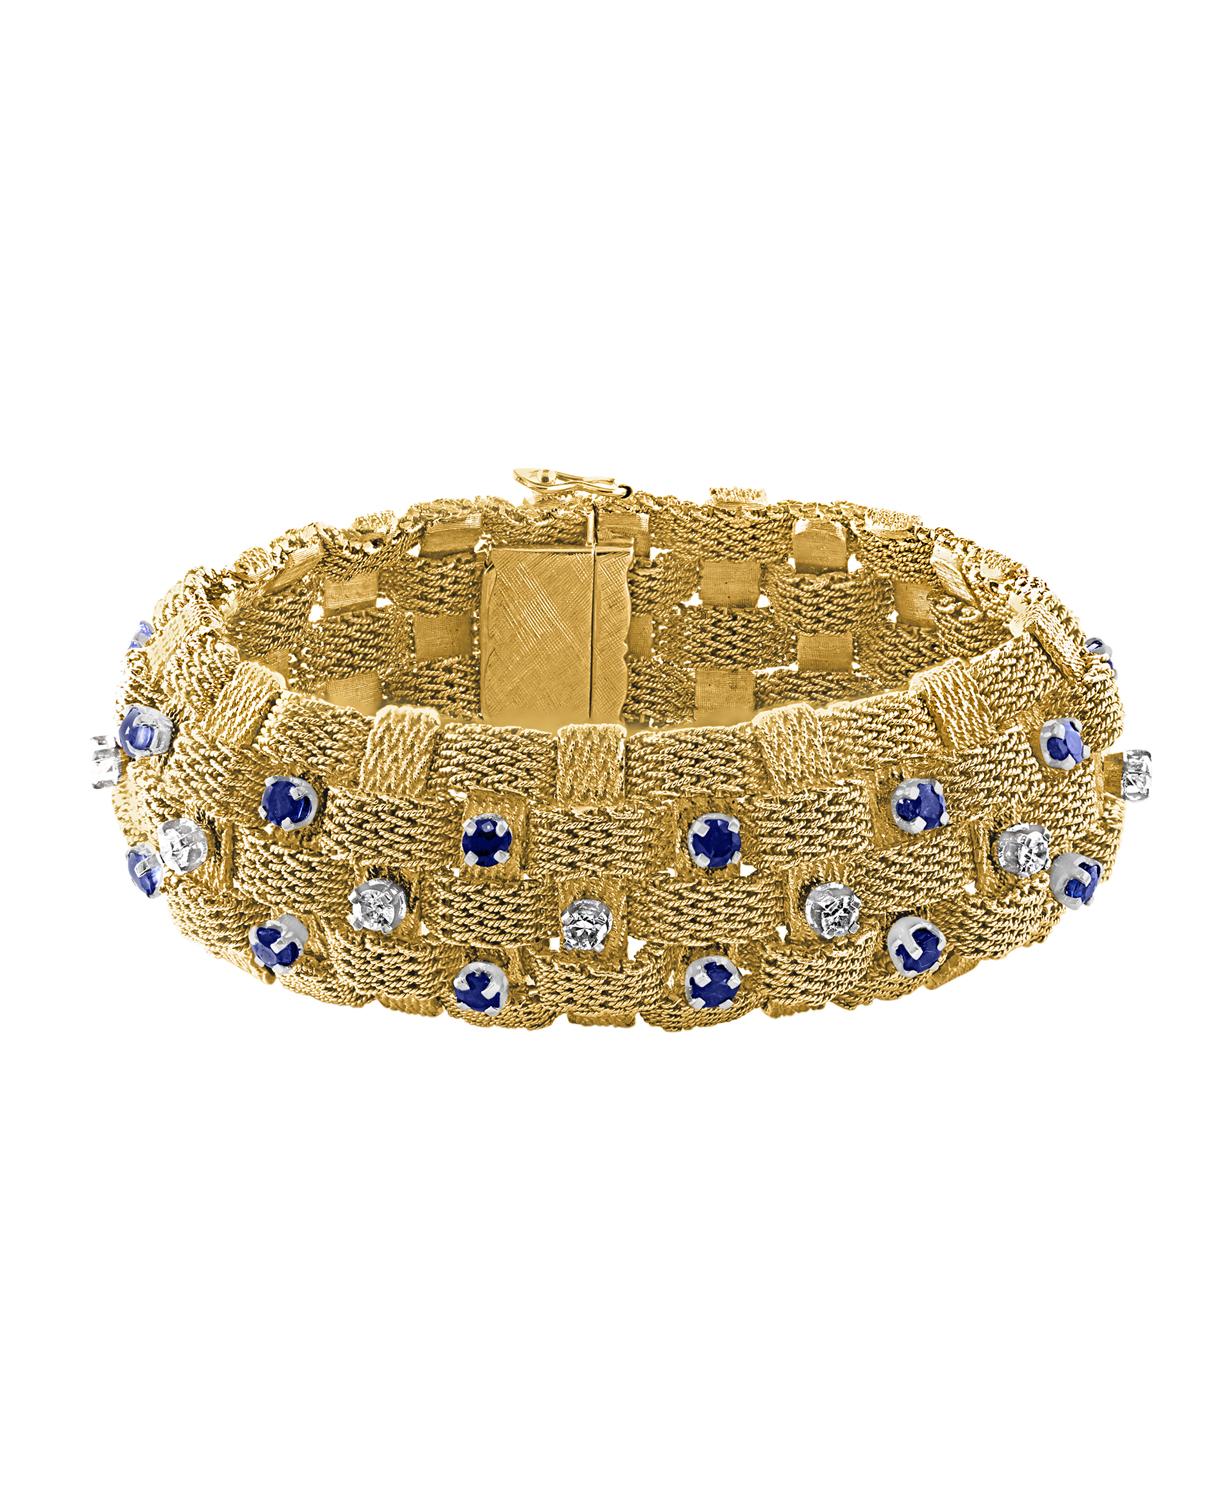 3 Karat Saphir & 2 Karat Diamant Armband in 18 Karat Gelbgold 116 Gm 7,5